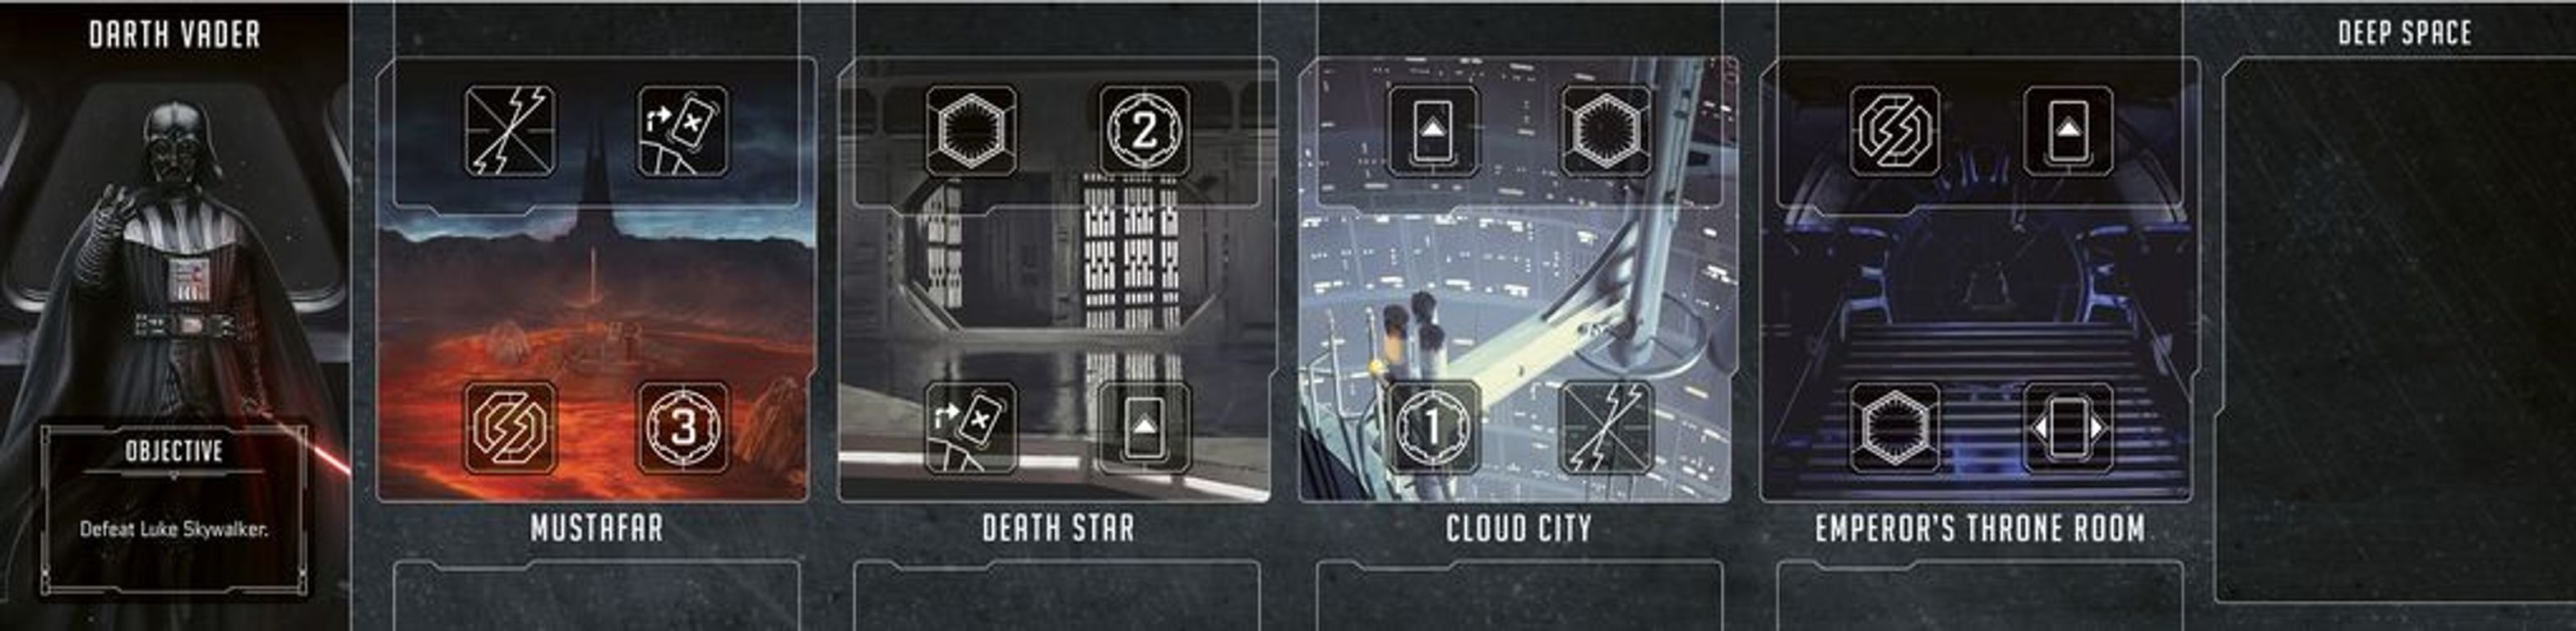 Star Wars Villainous: Power of the Dark Side kaarten